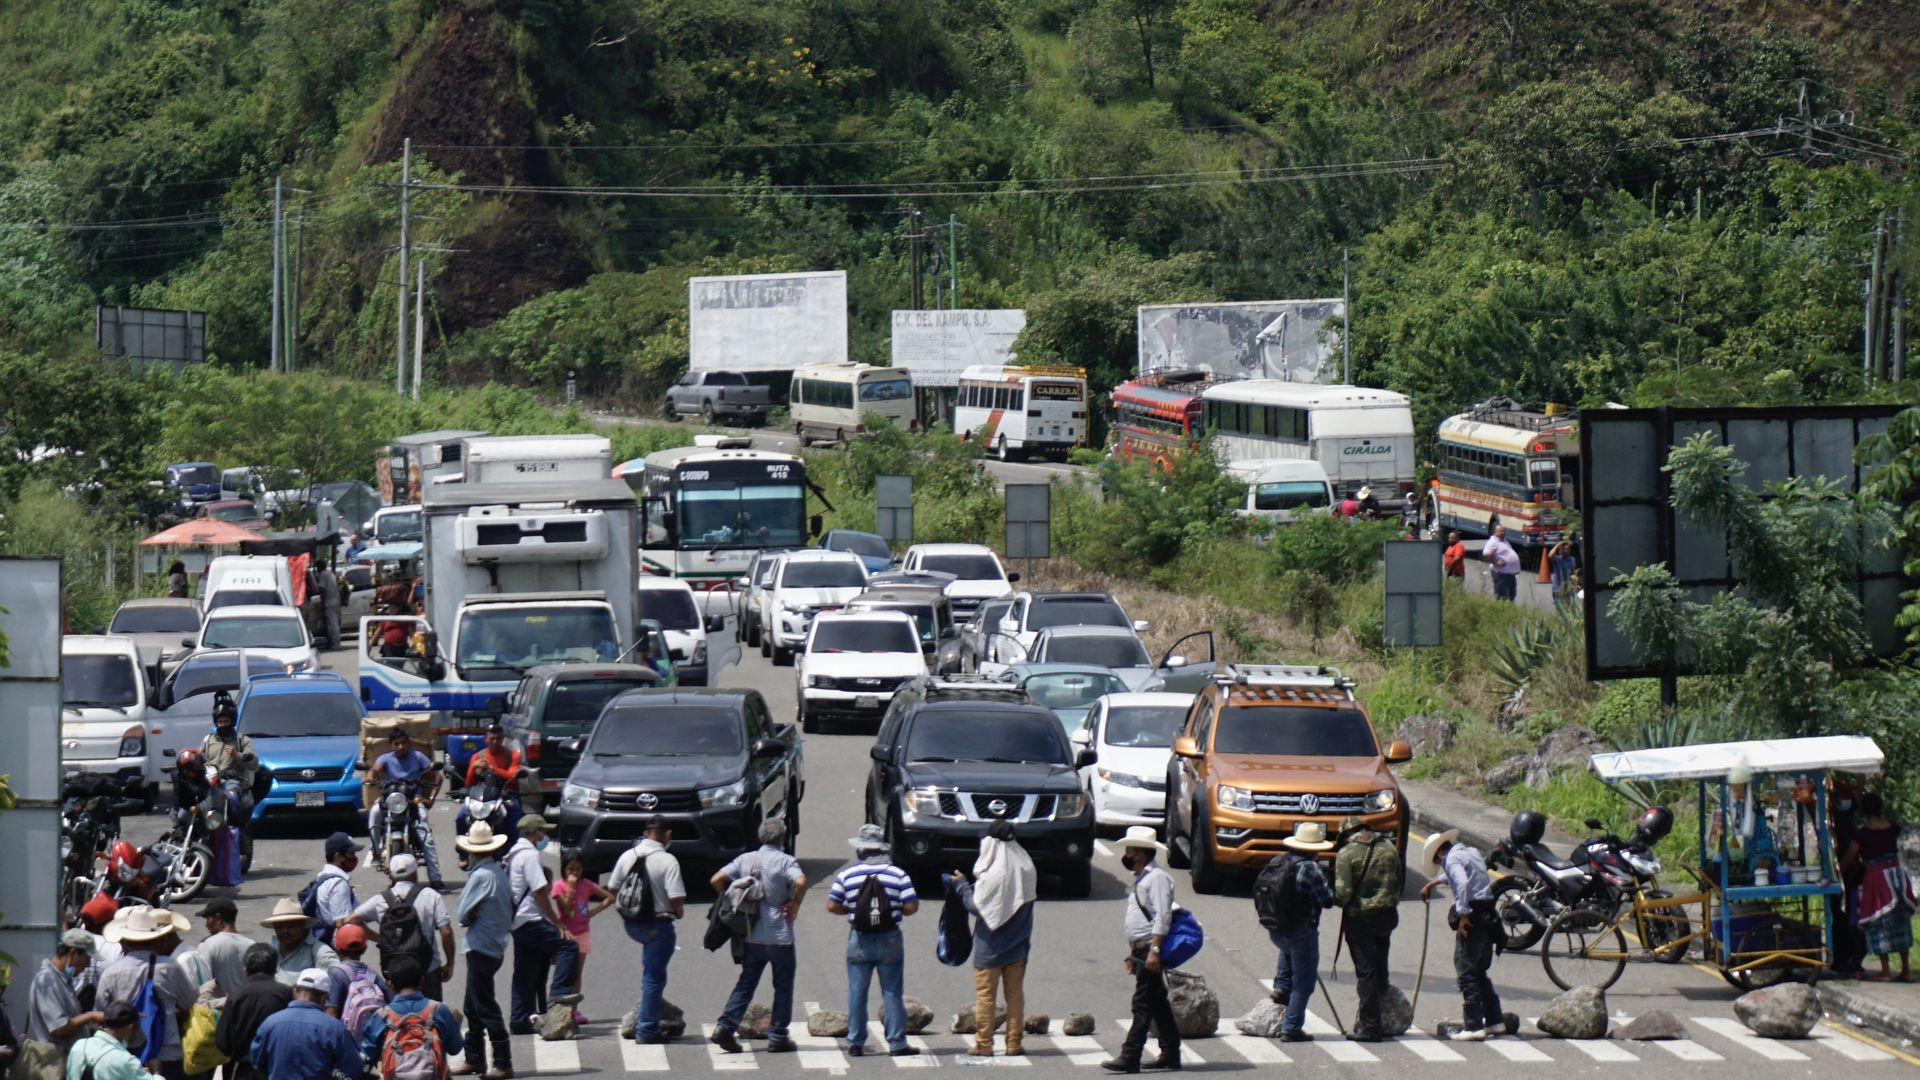 Former military men use rocks to block a road in El Boqueron, Cuilapa, Guatemala on October 13, 2021.